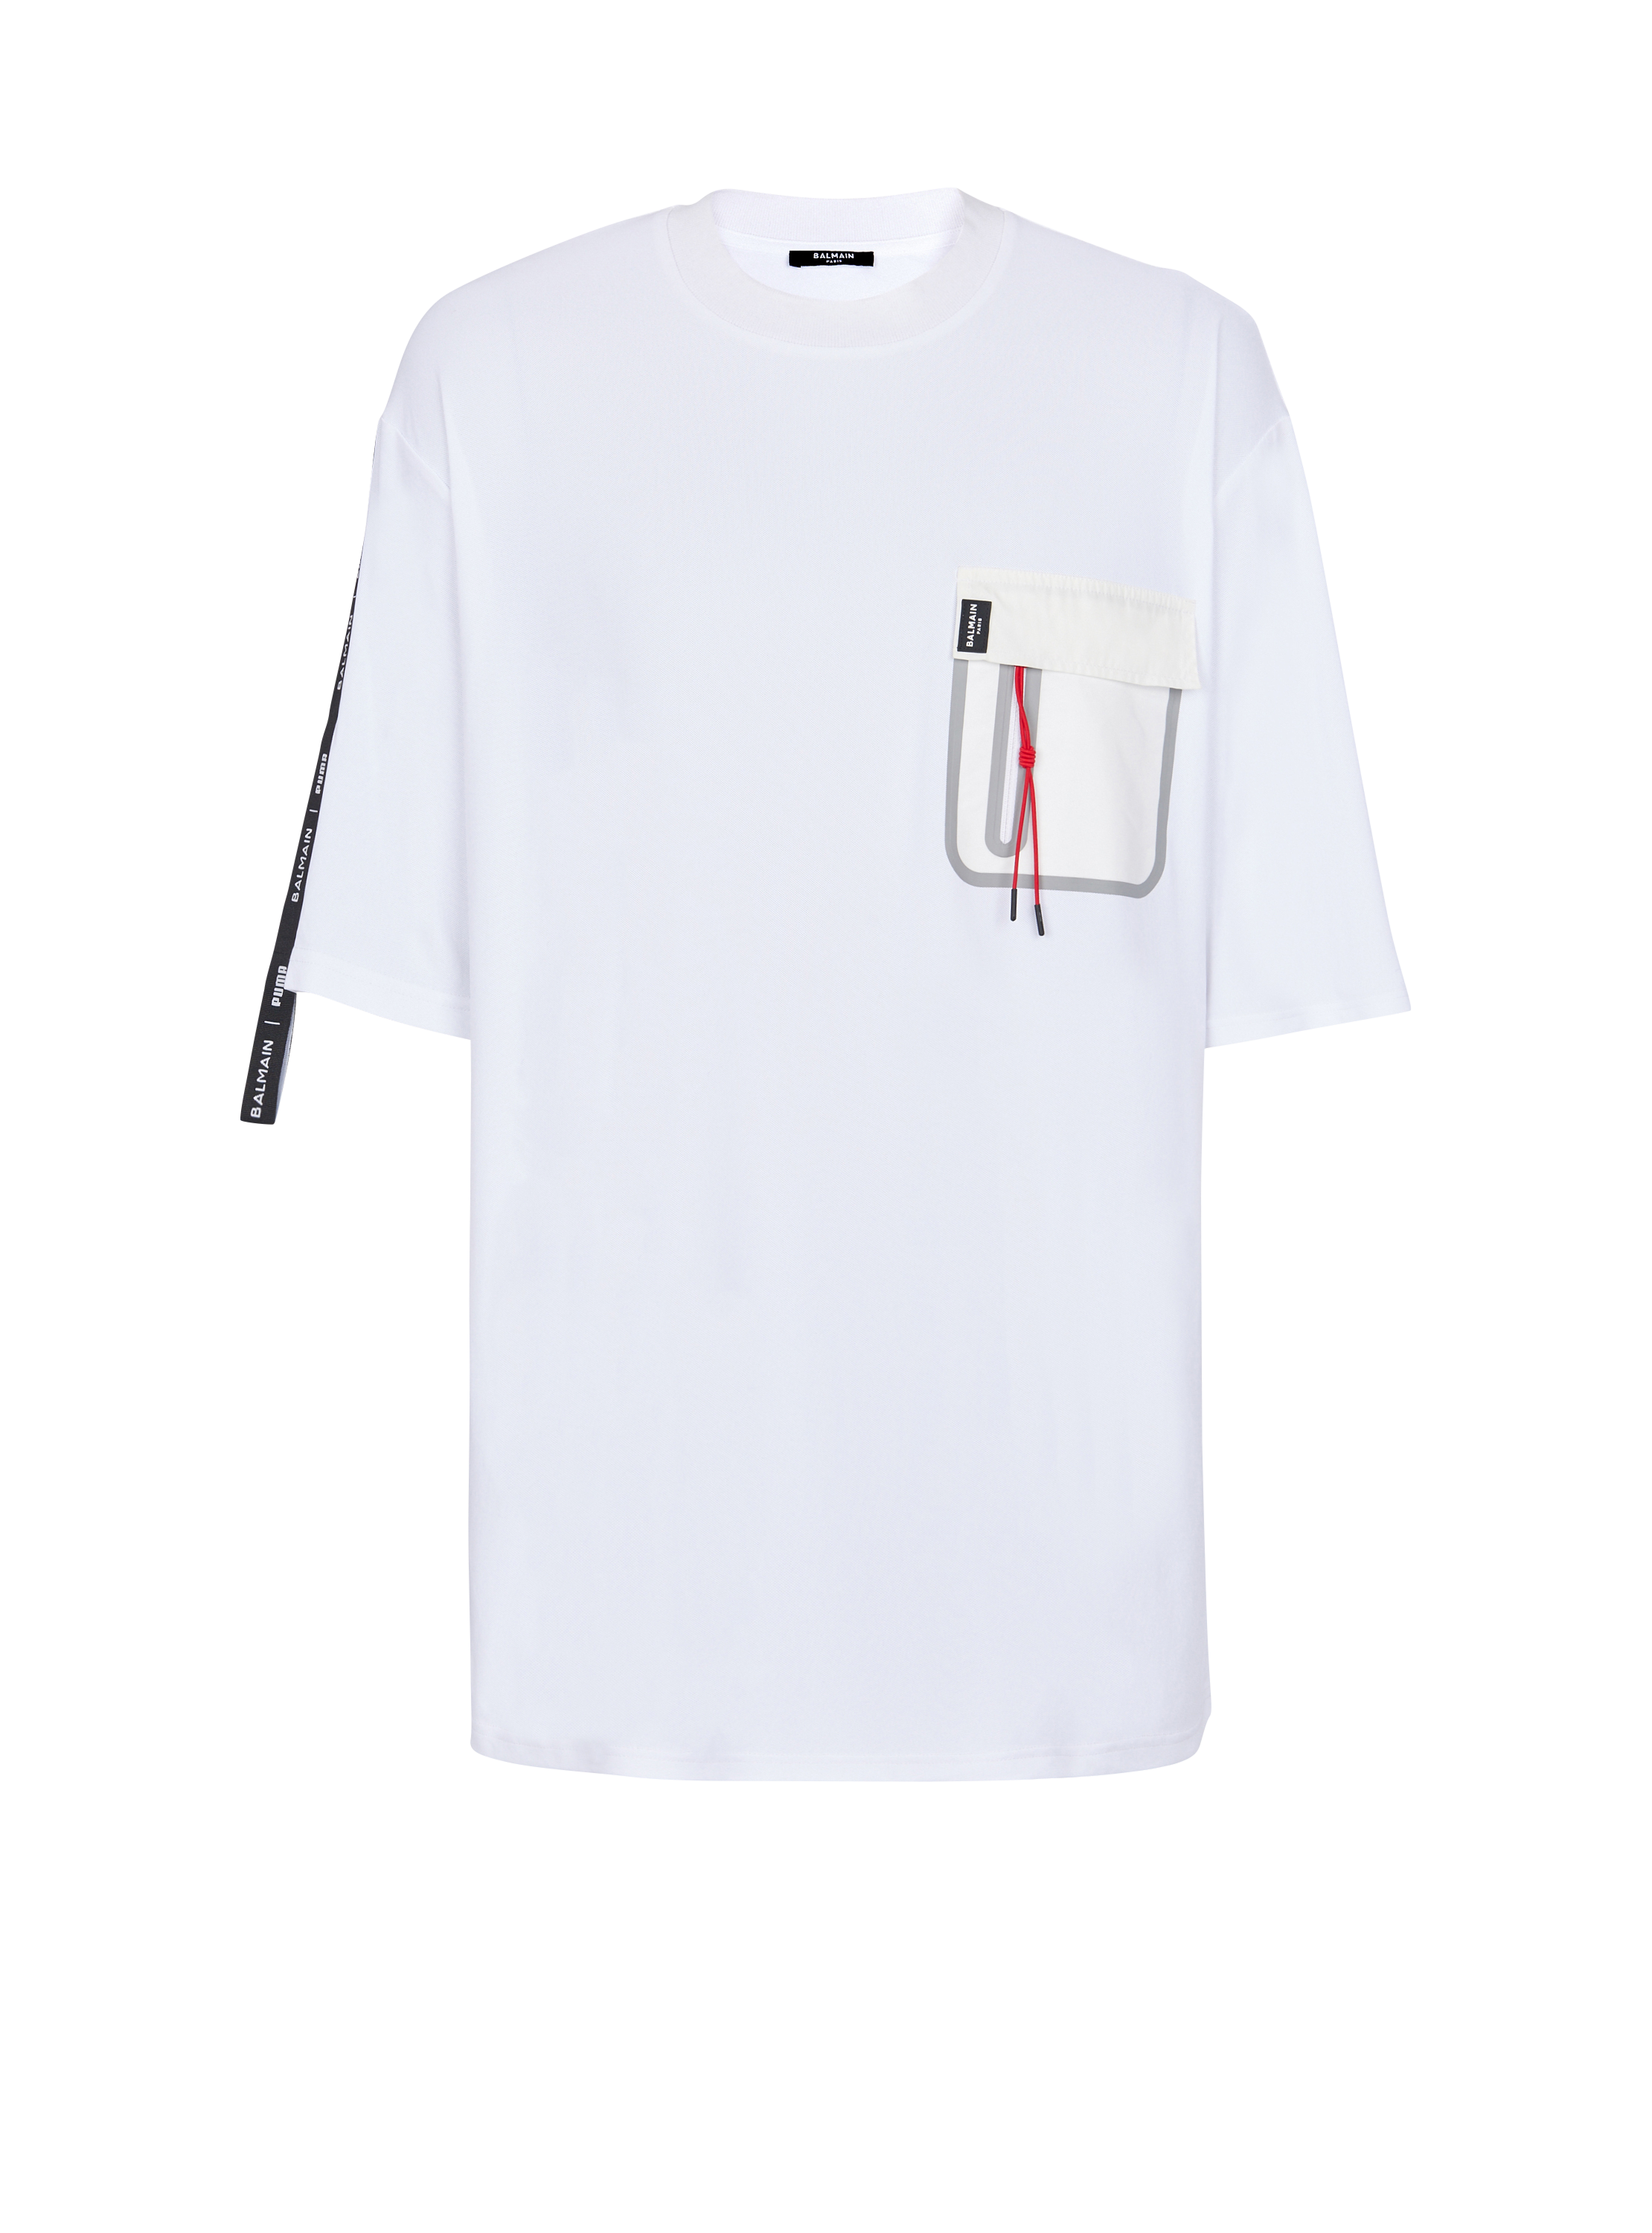 Balmain x Puma - T-shirt oversize à poche